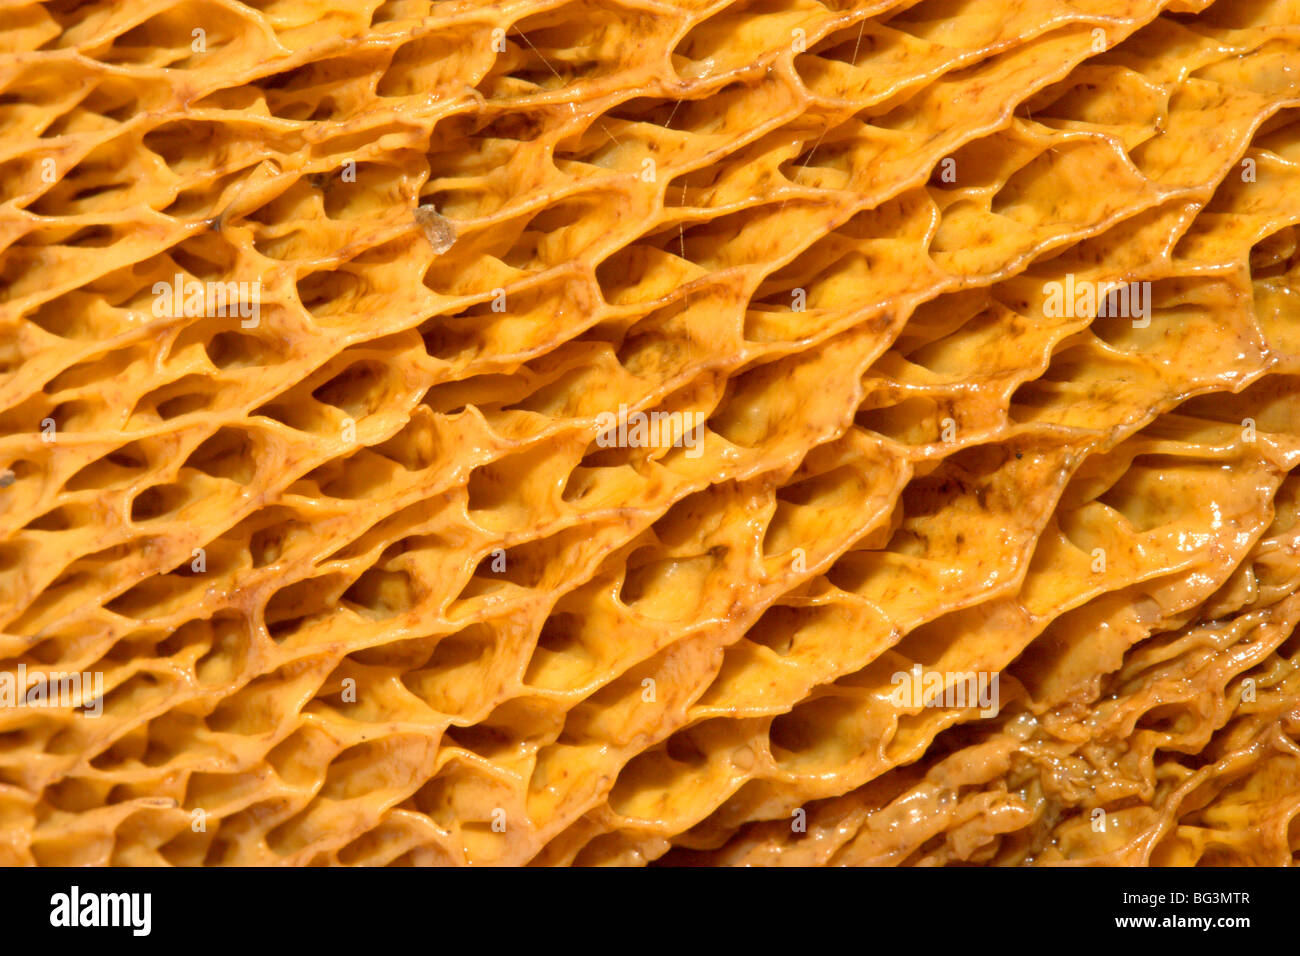 Mushroom pores Stock Photo